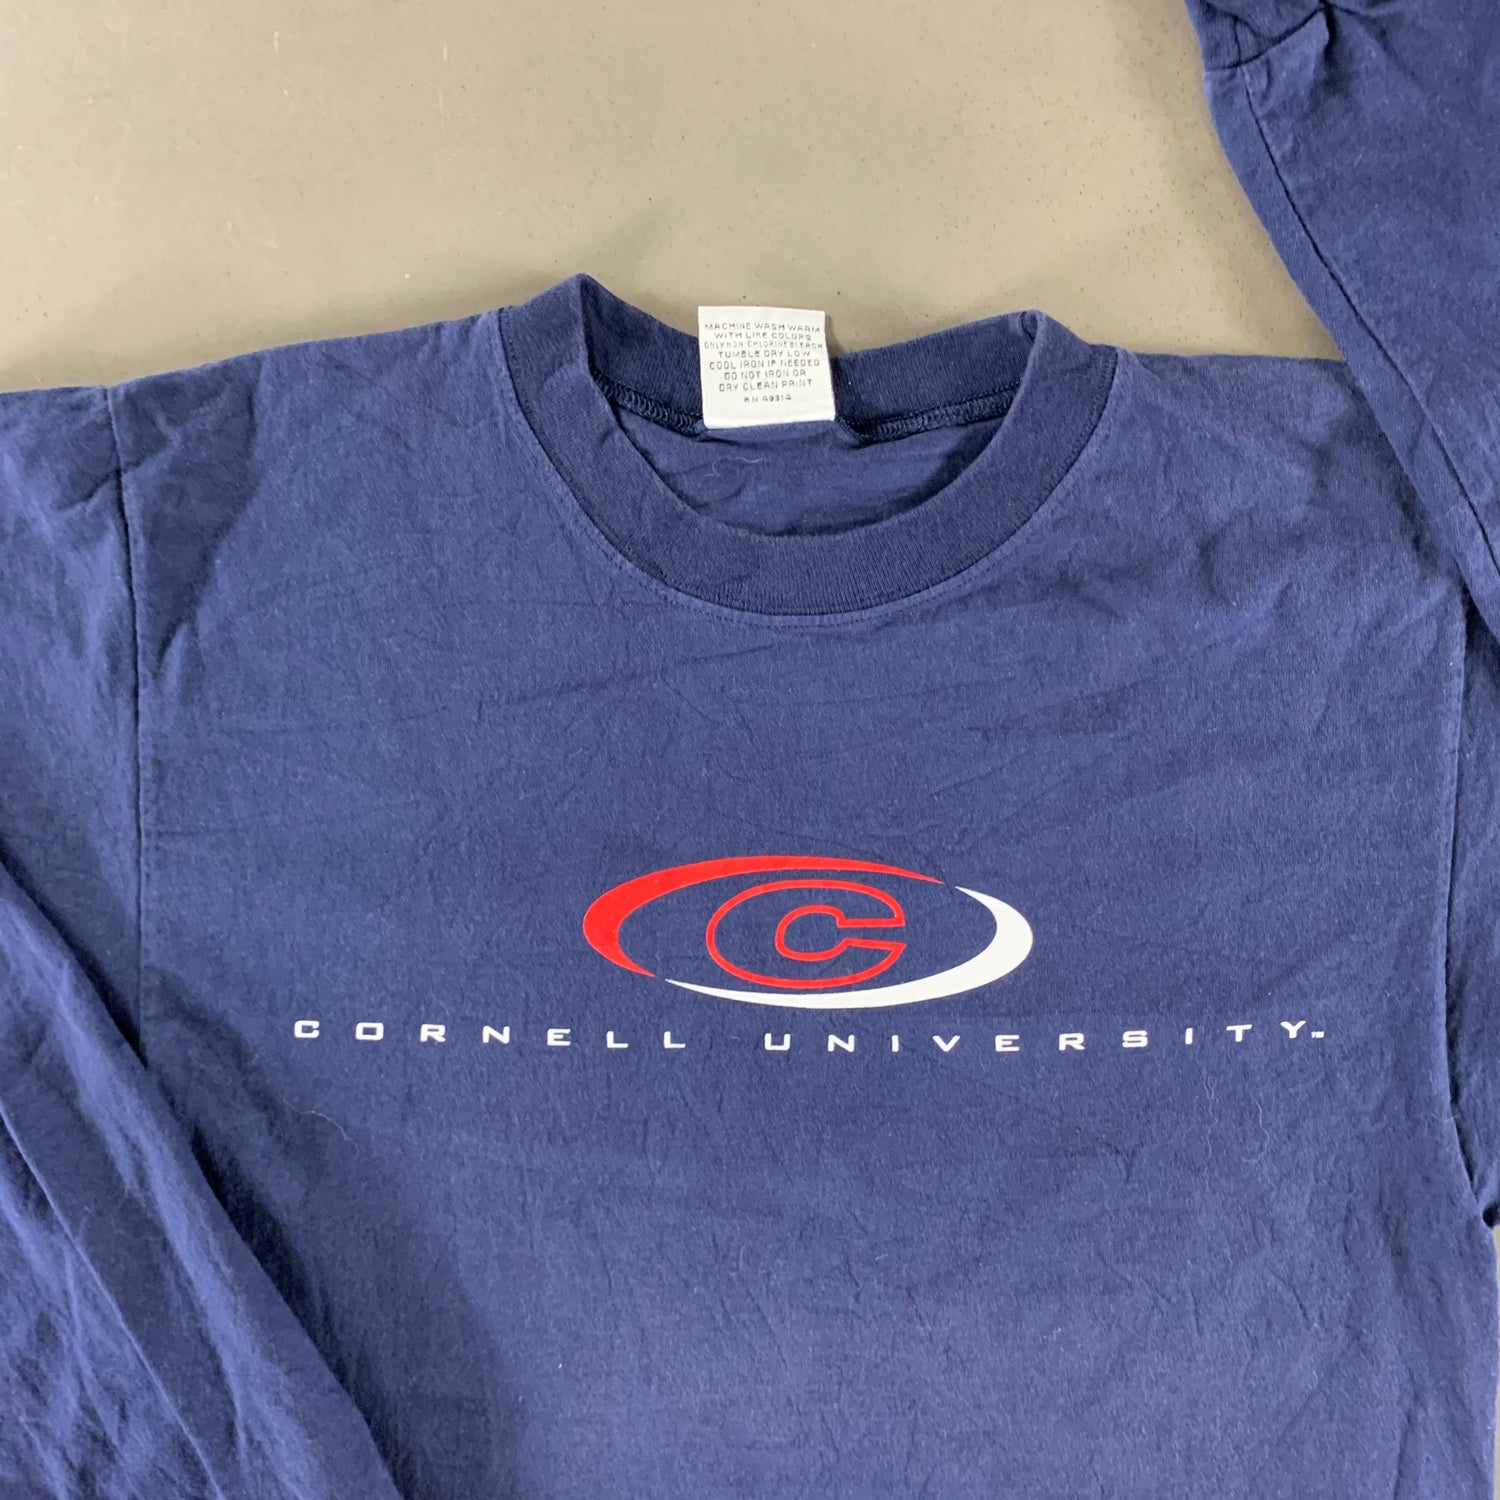 Vintage 1990s Cornell University T-shirt size Small